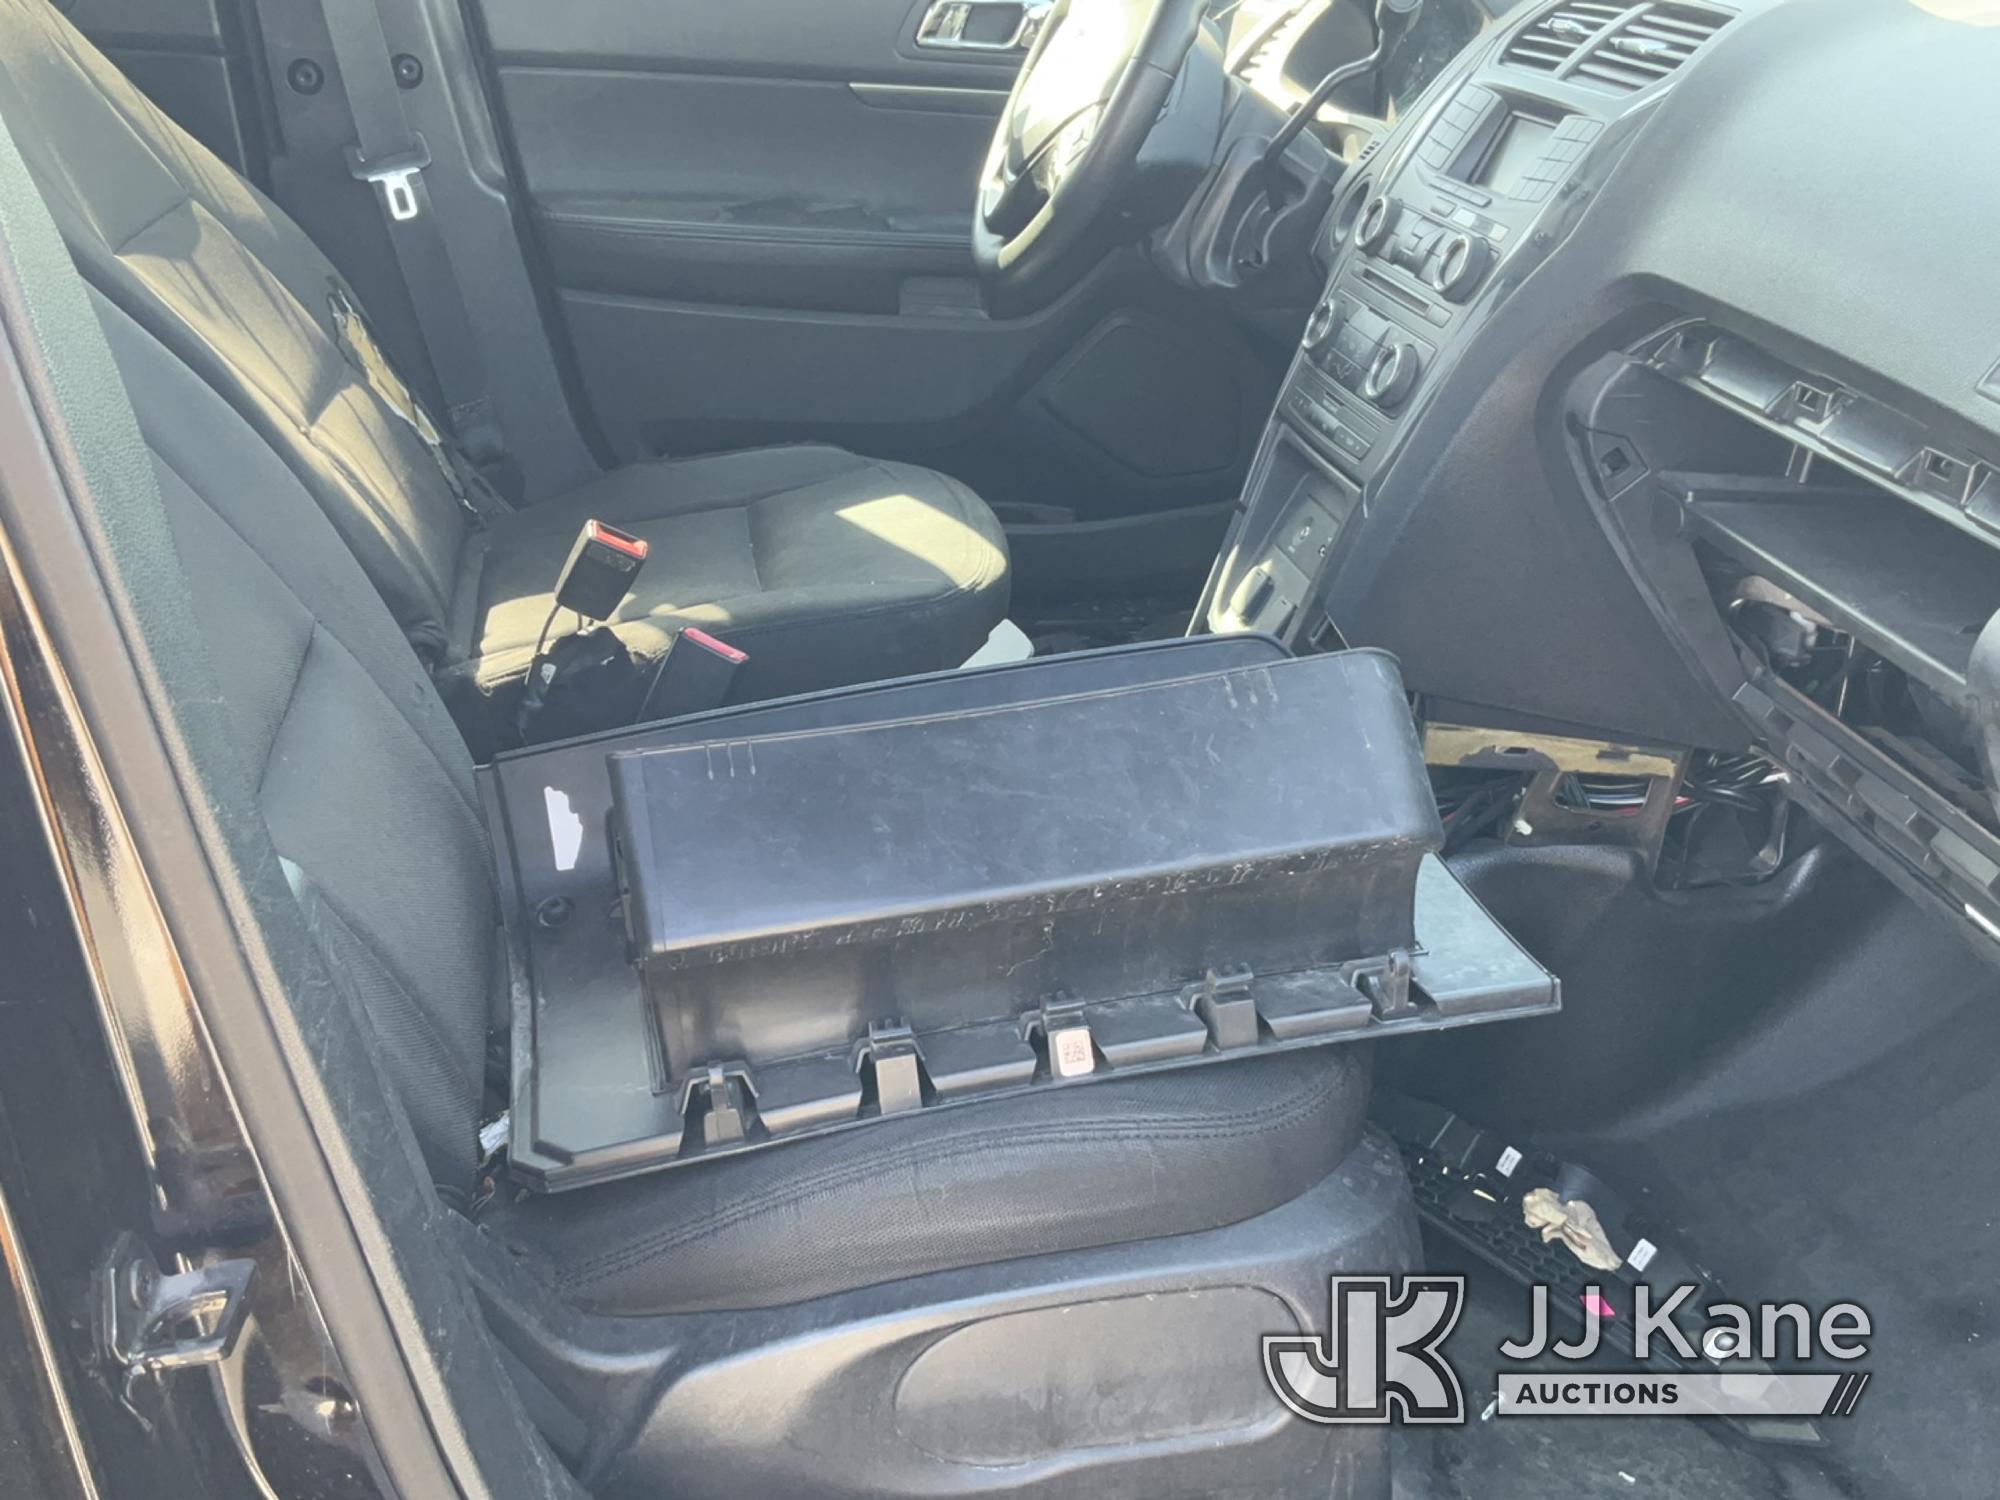 (Las Vegas, NV) 2017 Ford Explorer AWD Police Interceptor No Engine & Transmission, Missing Parts